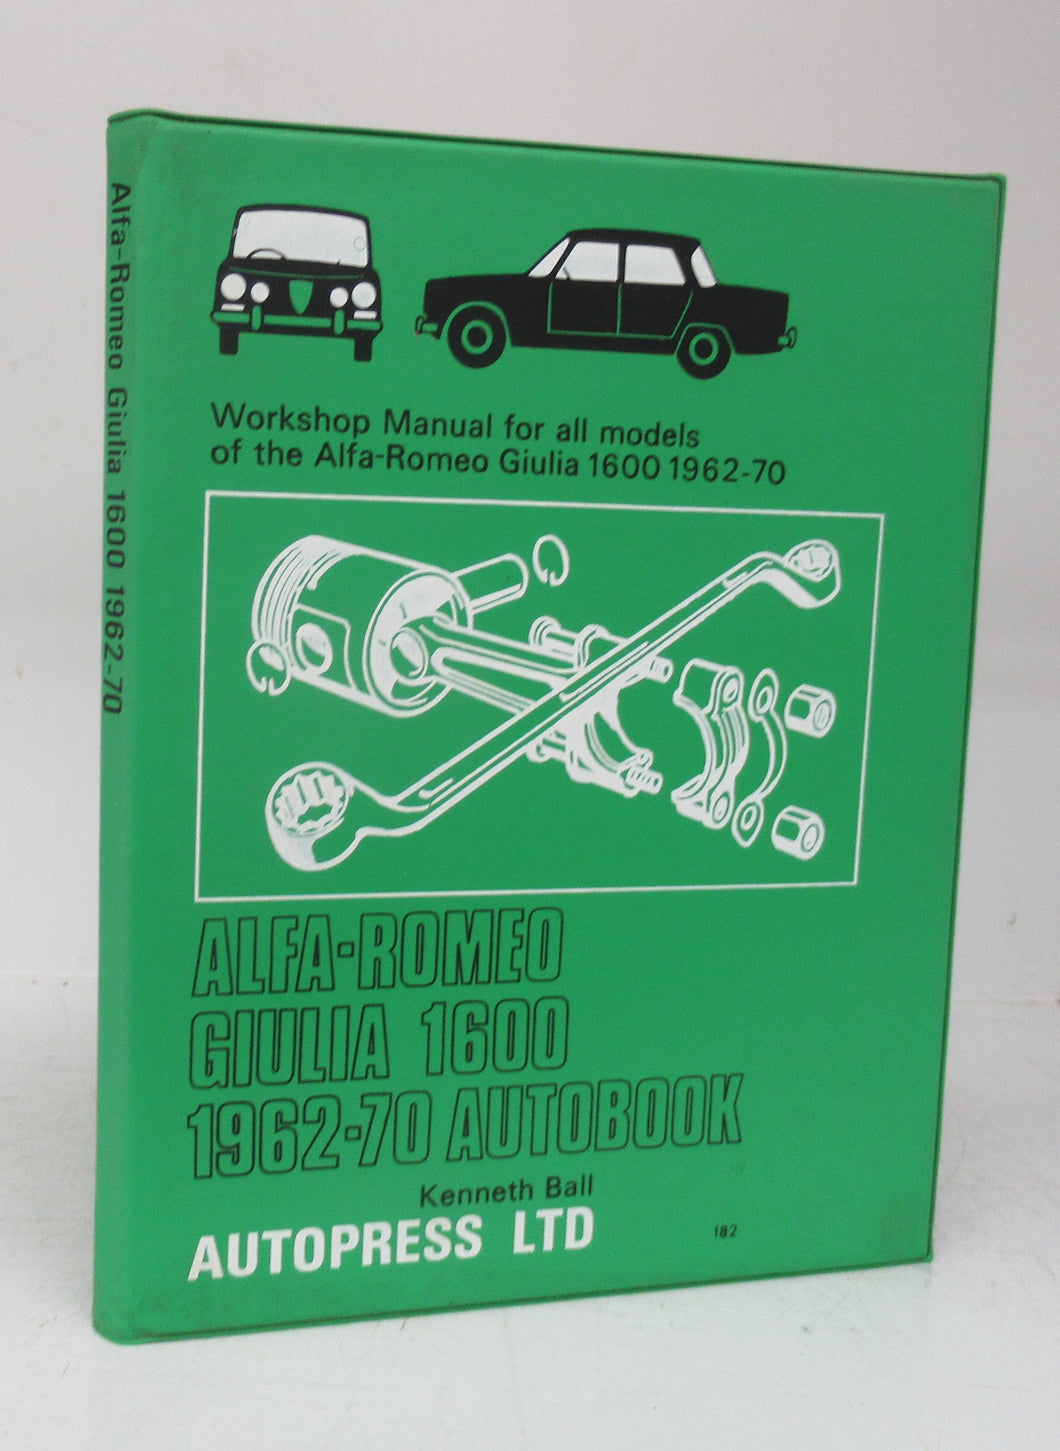 Alfa-Romeo Giulia 1600 1962-70: Workshop Manual for all models 